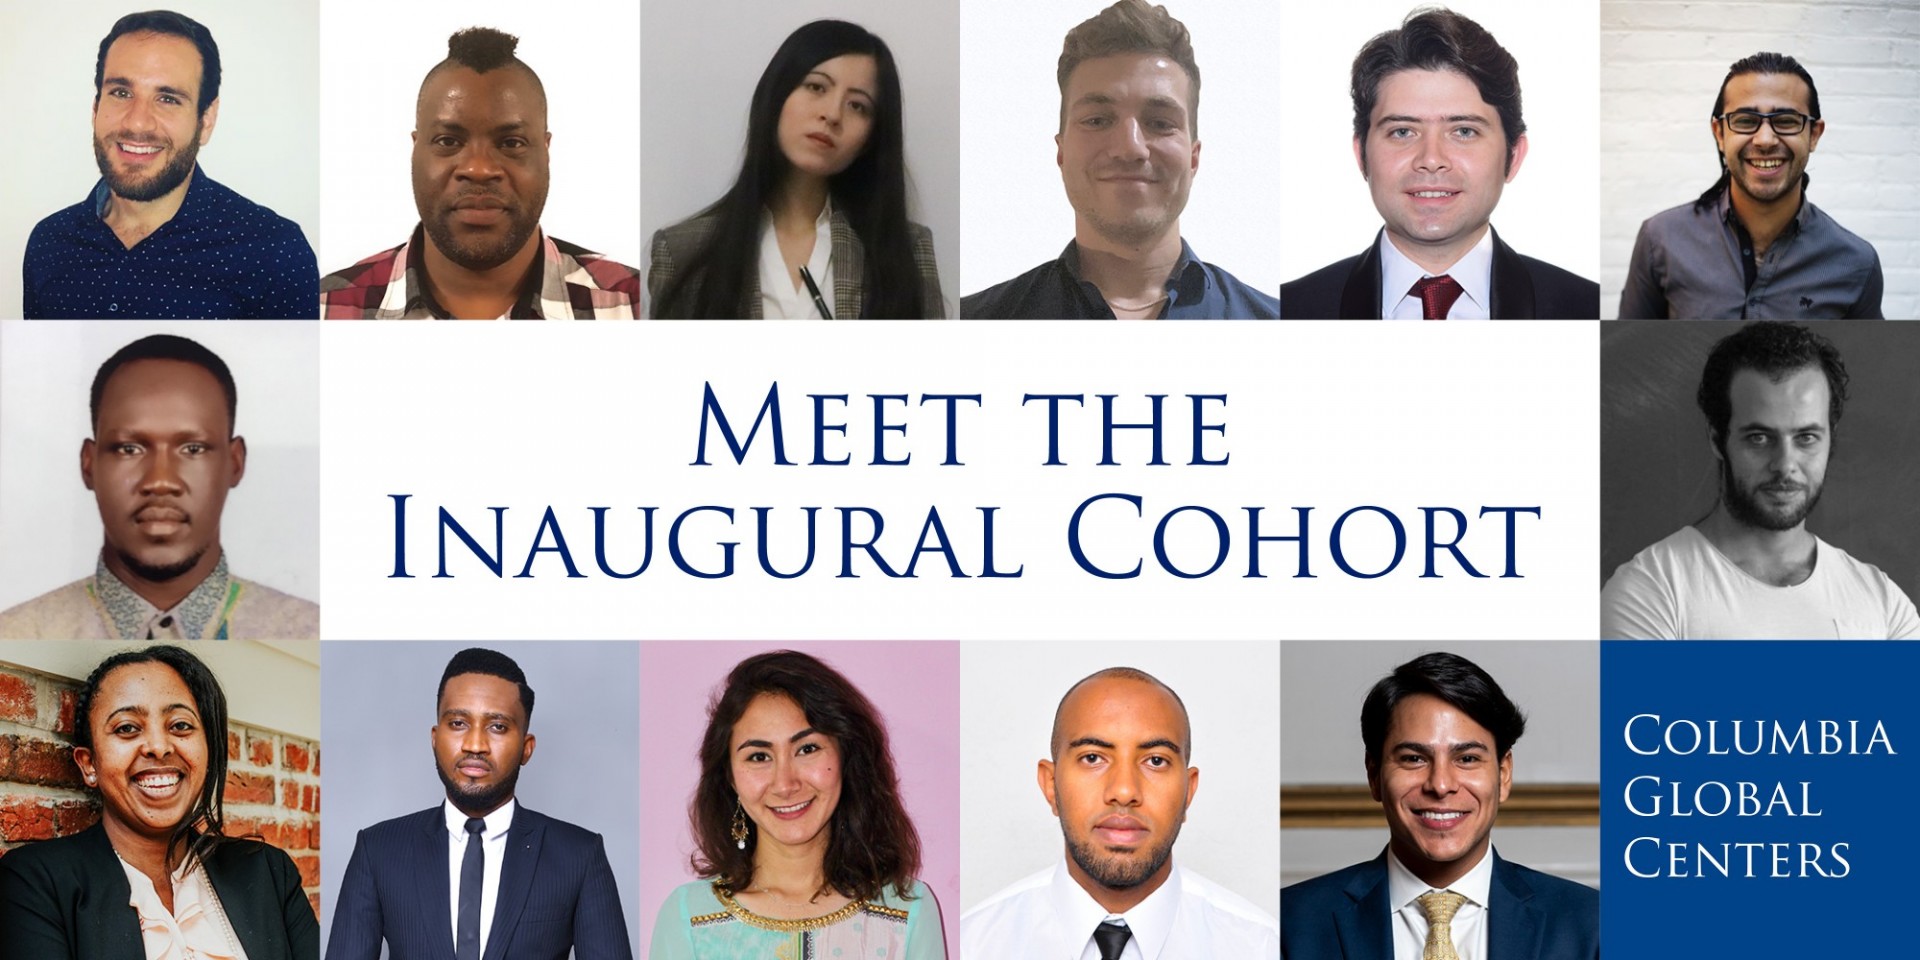 Meet the Inaugural Cohort